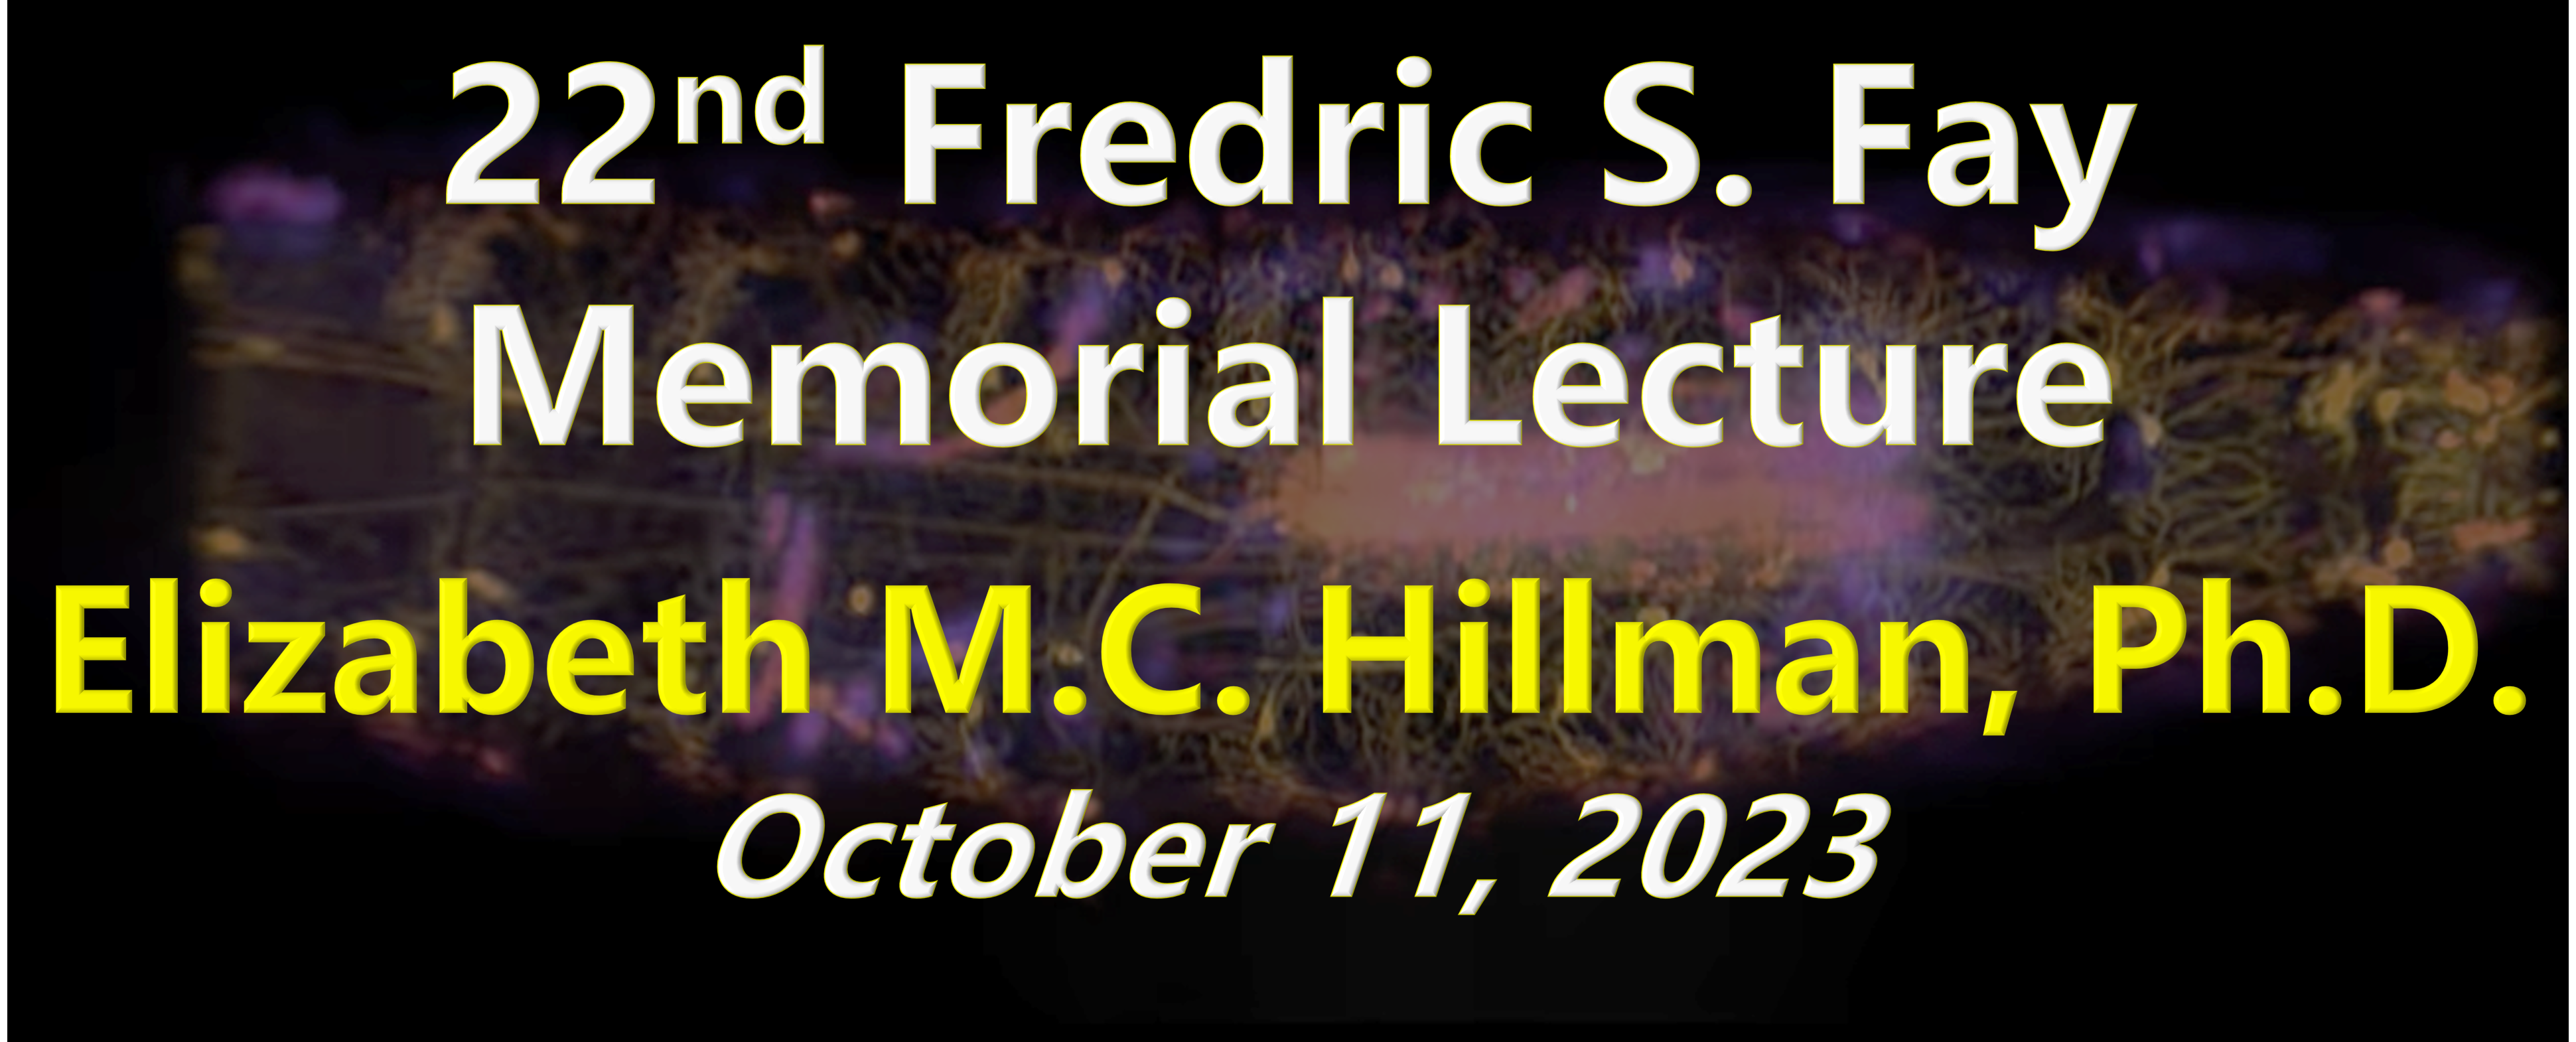 Elizabeth Hillman presents the Fred Fay Lecture 2023.